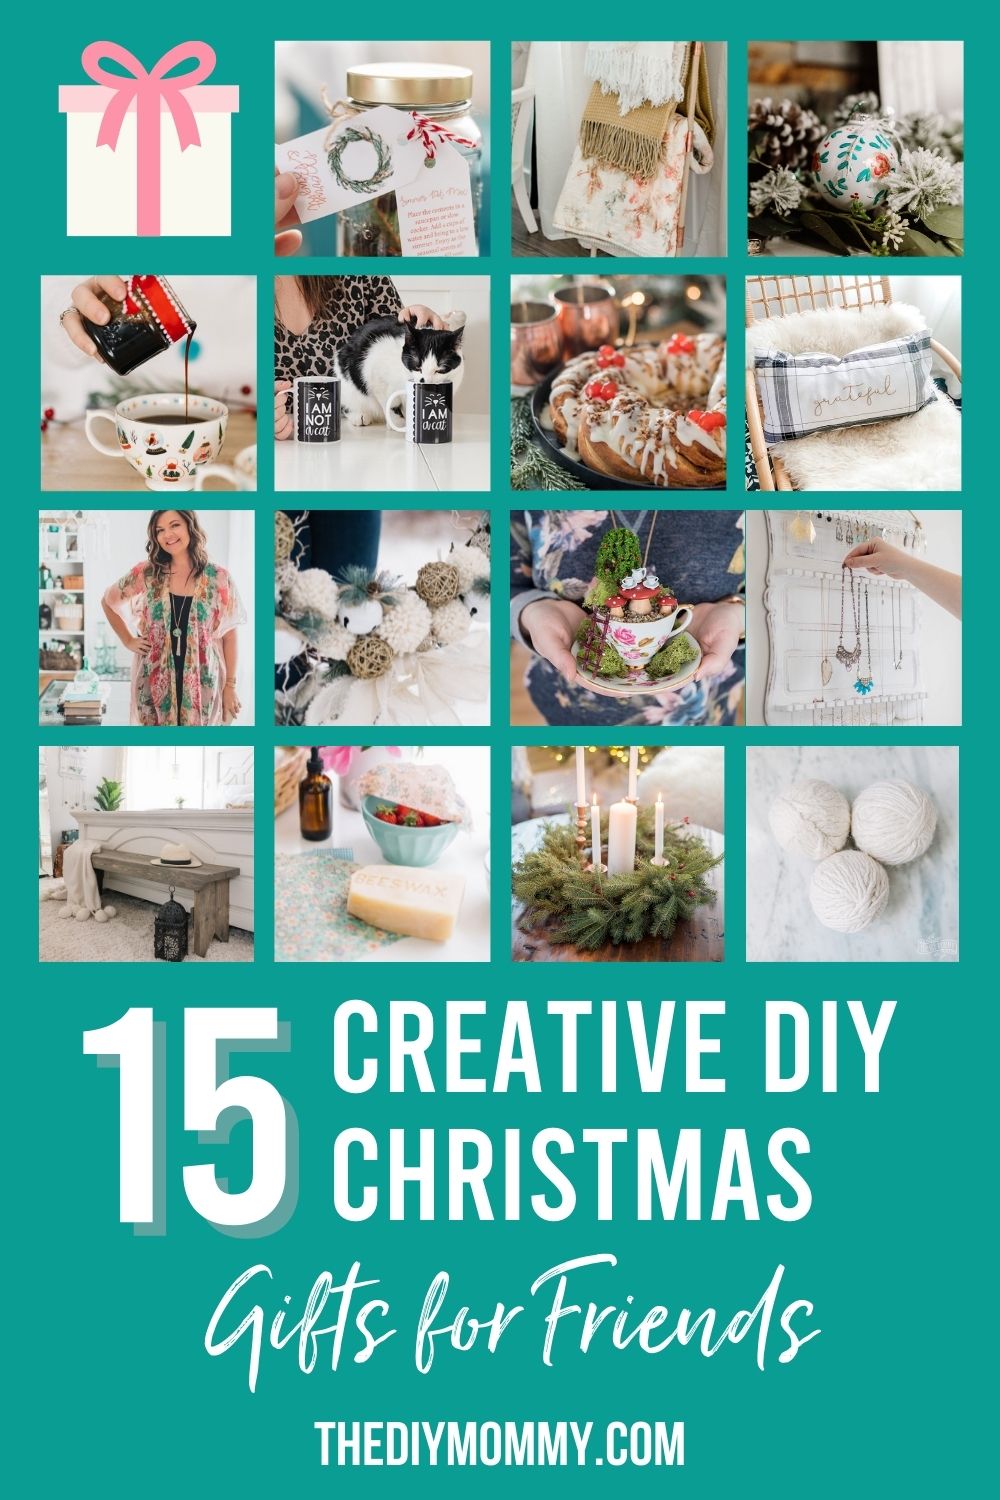 15 Creative DIY Christmas Gift Ideas for Friends